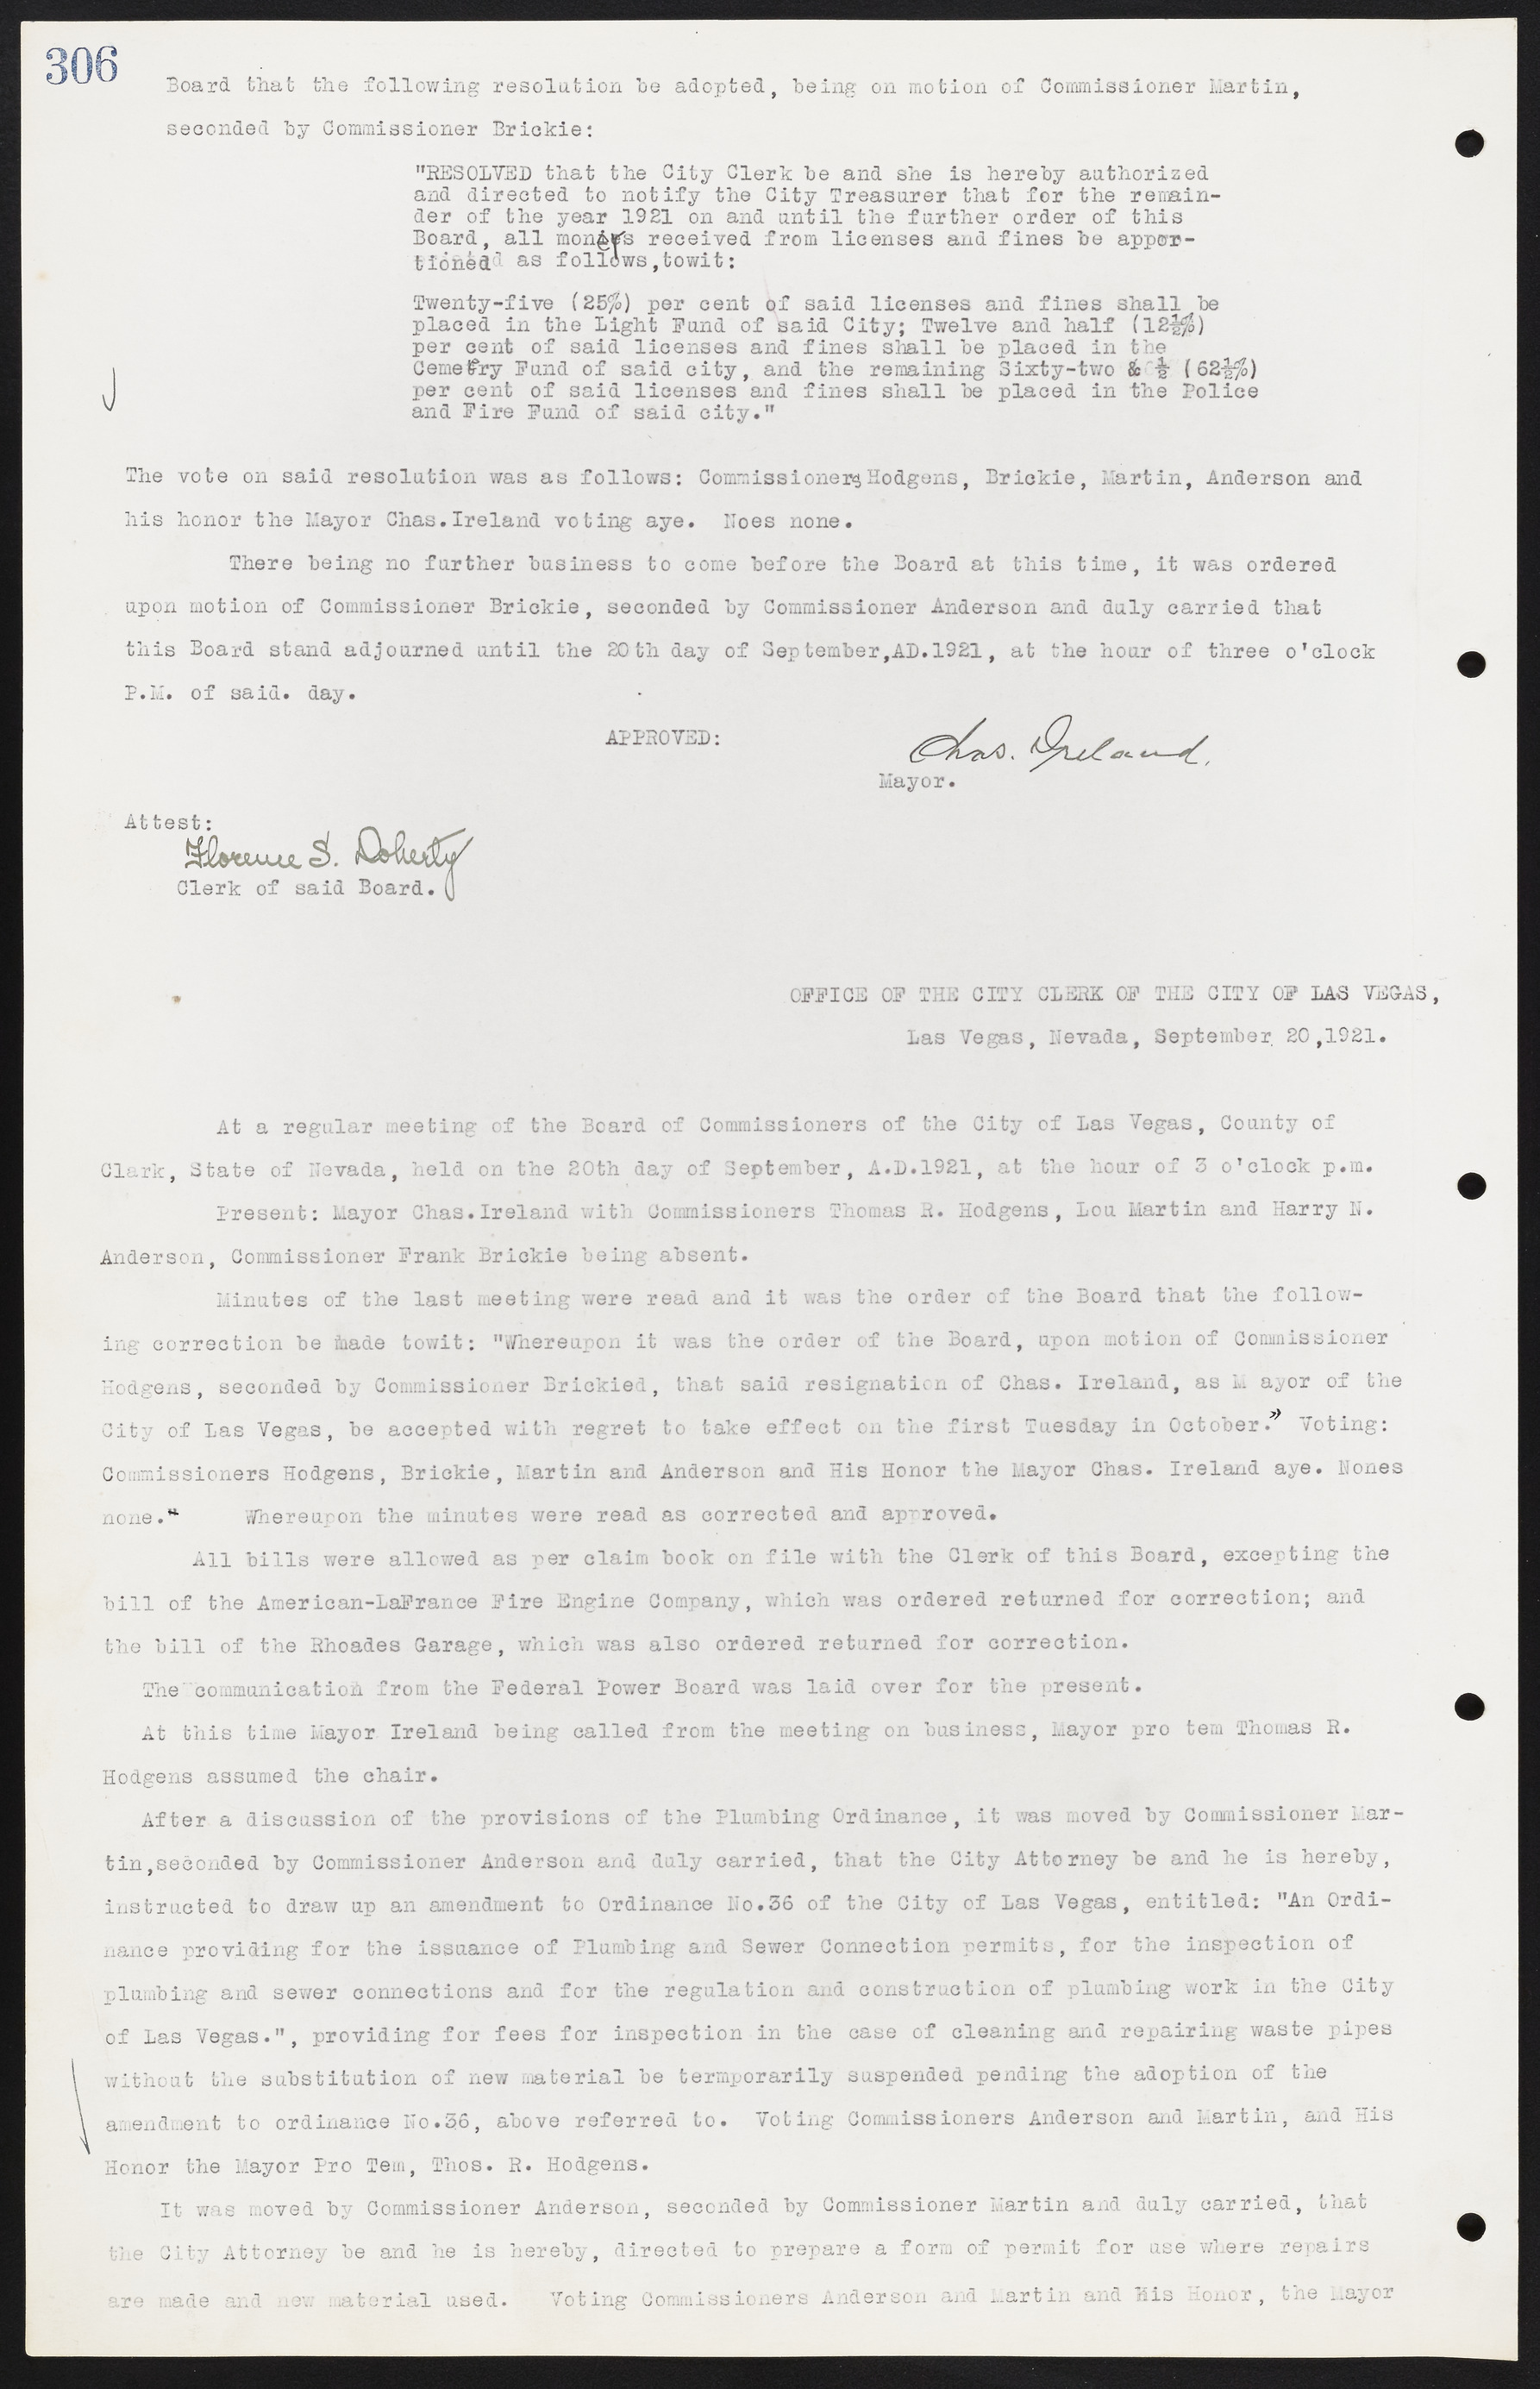 Las Vegas City Commission Minutes, June 22, 1911 to February 7, 1922, lvc000001-322